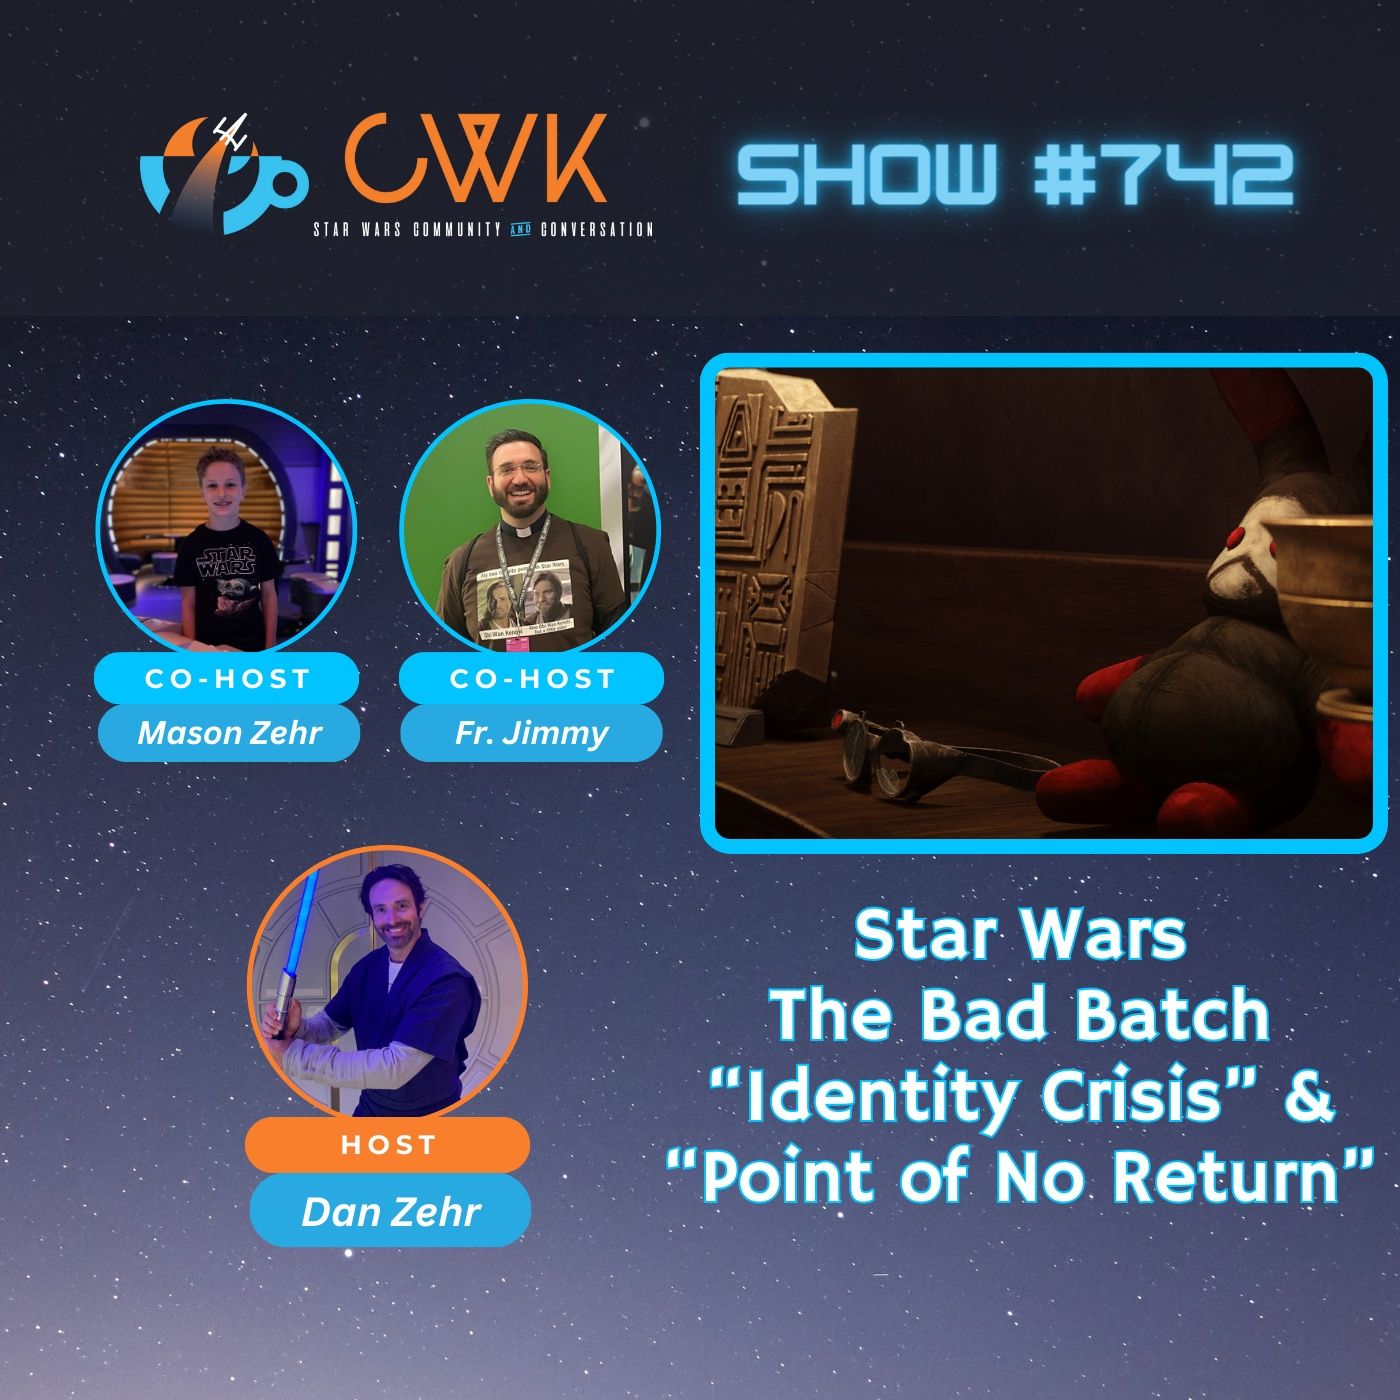 CWK Show #742: The Bad Batch- “Identity Crisis